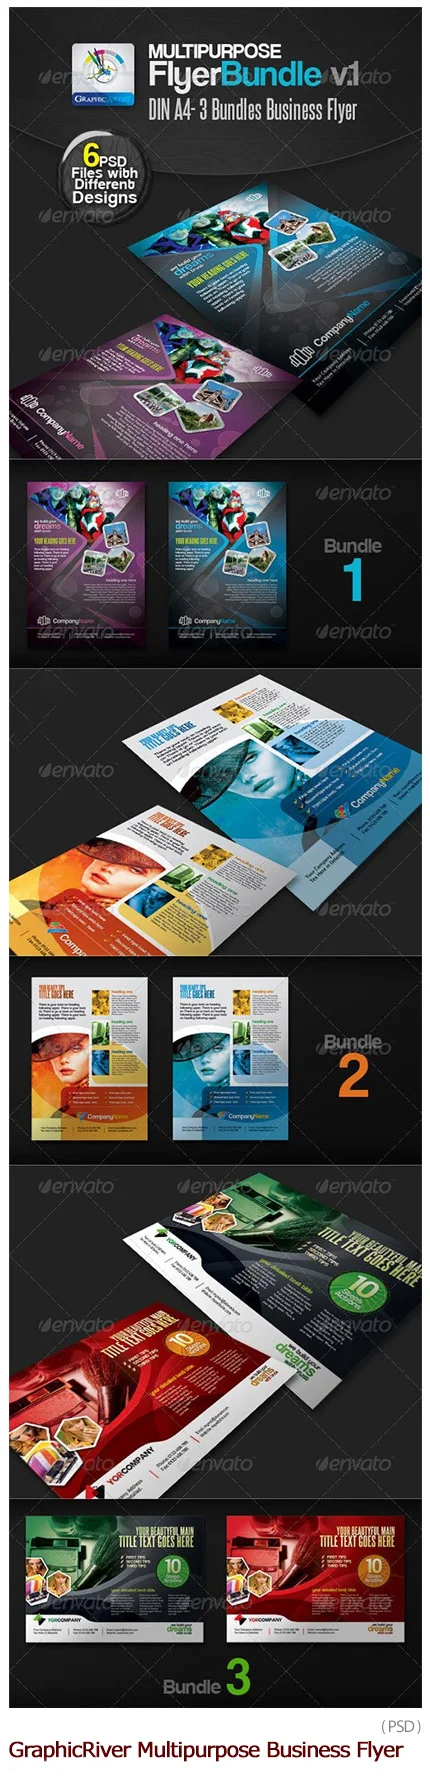 GraphicRiver Multipurpose Business Flyer